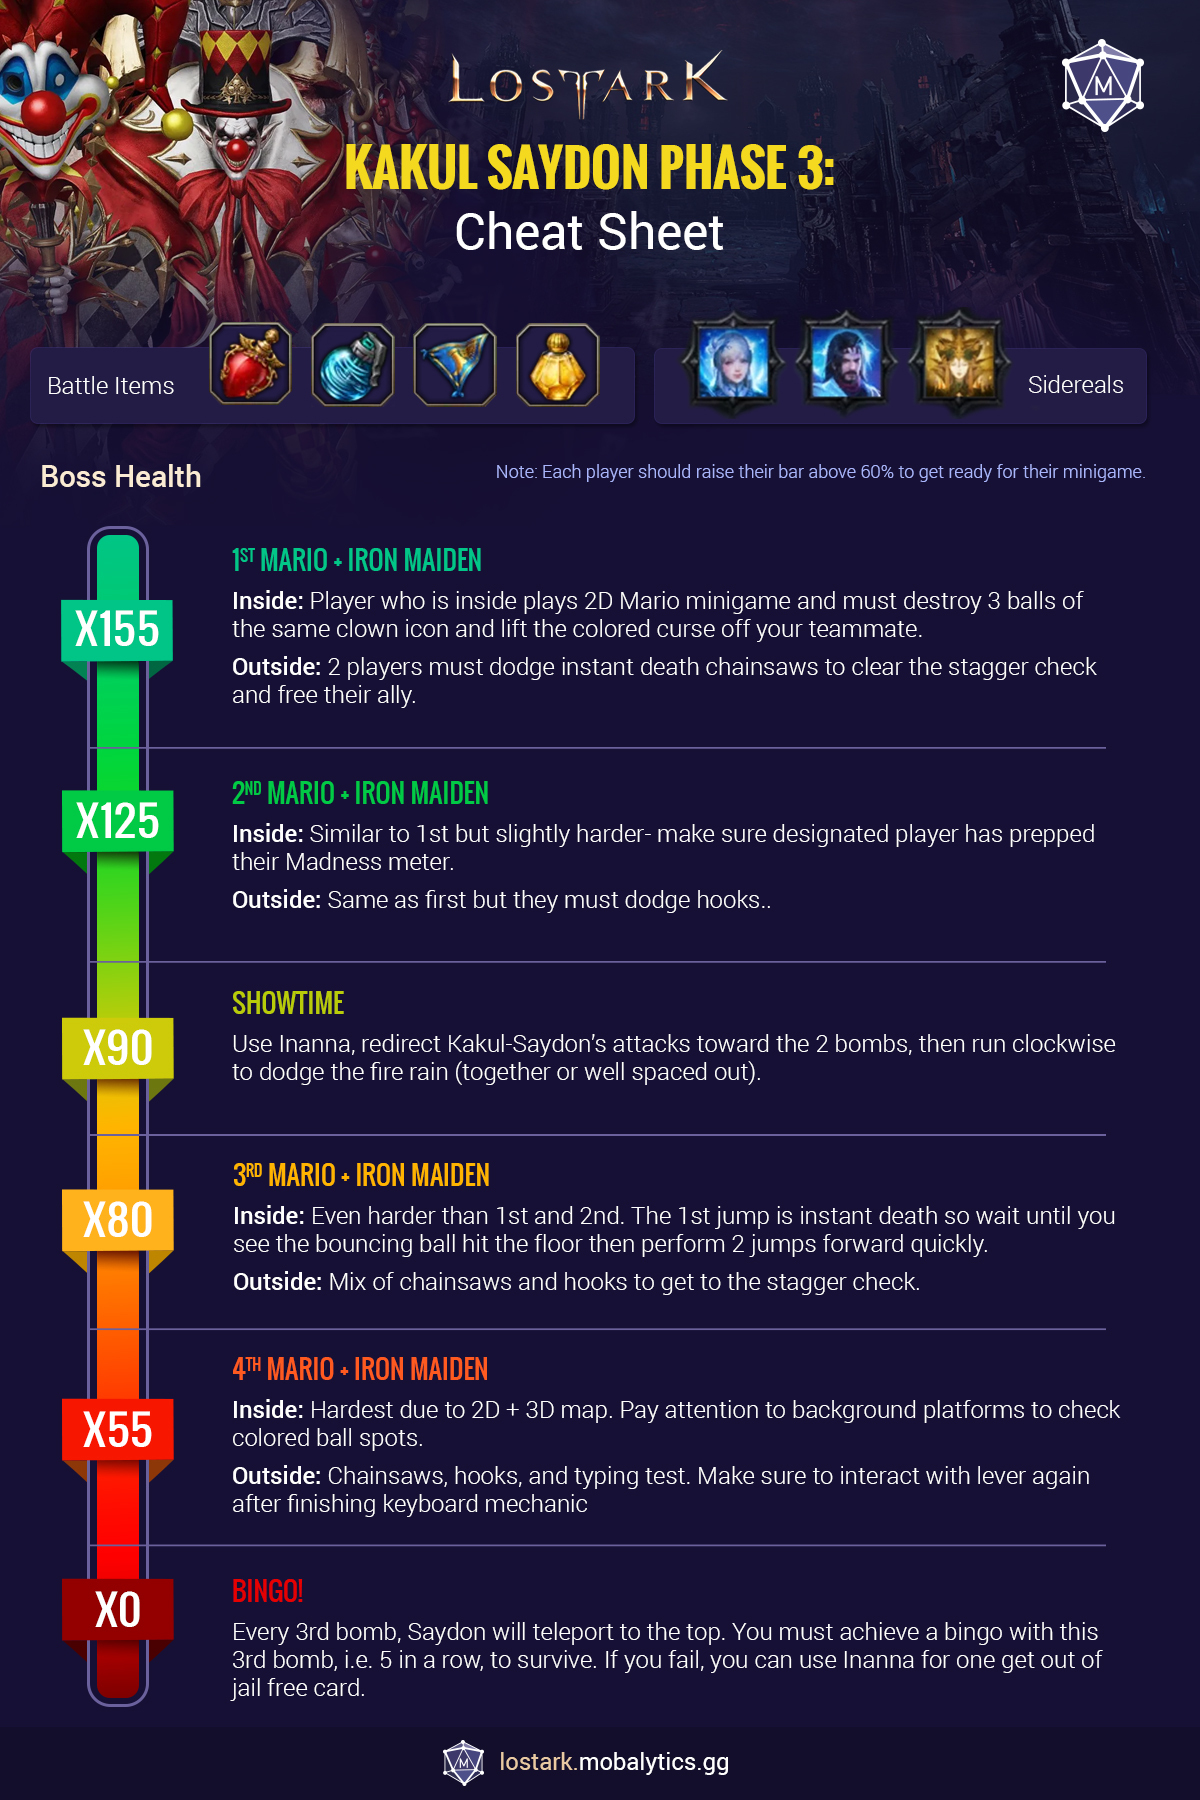 Kakul-Saydon Phase 3 Cheat Sheet Infographic